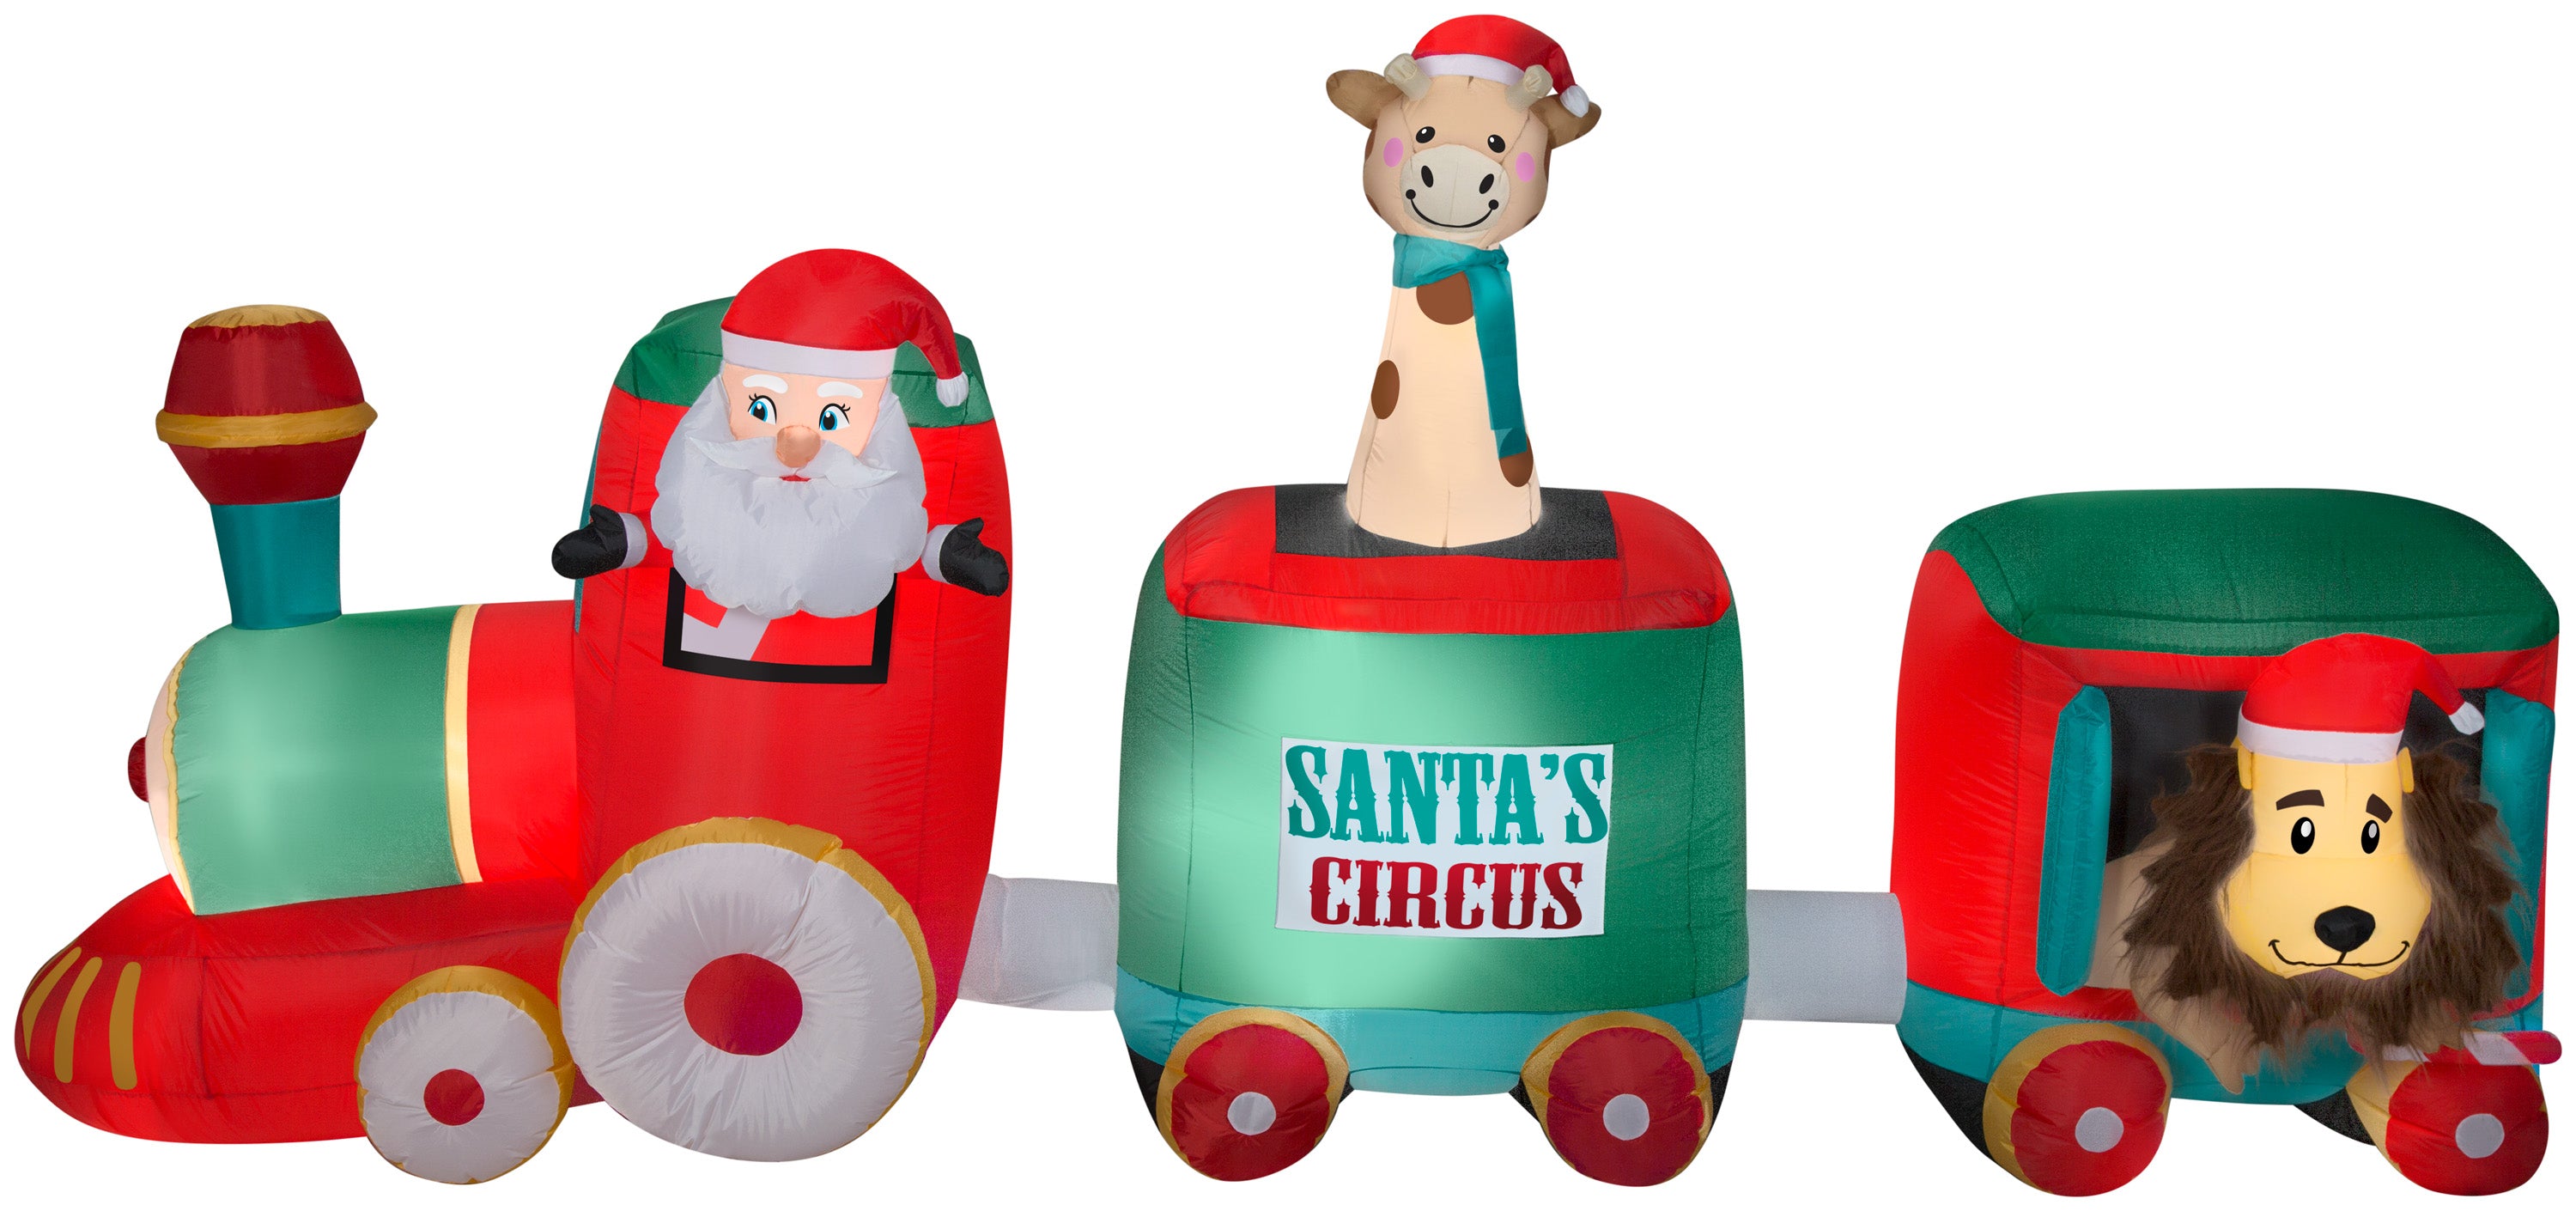 5' Airblown Mixed Media Santa in Circus Train Giant Christmas Inflatable